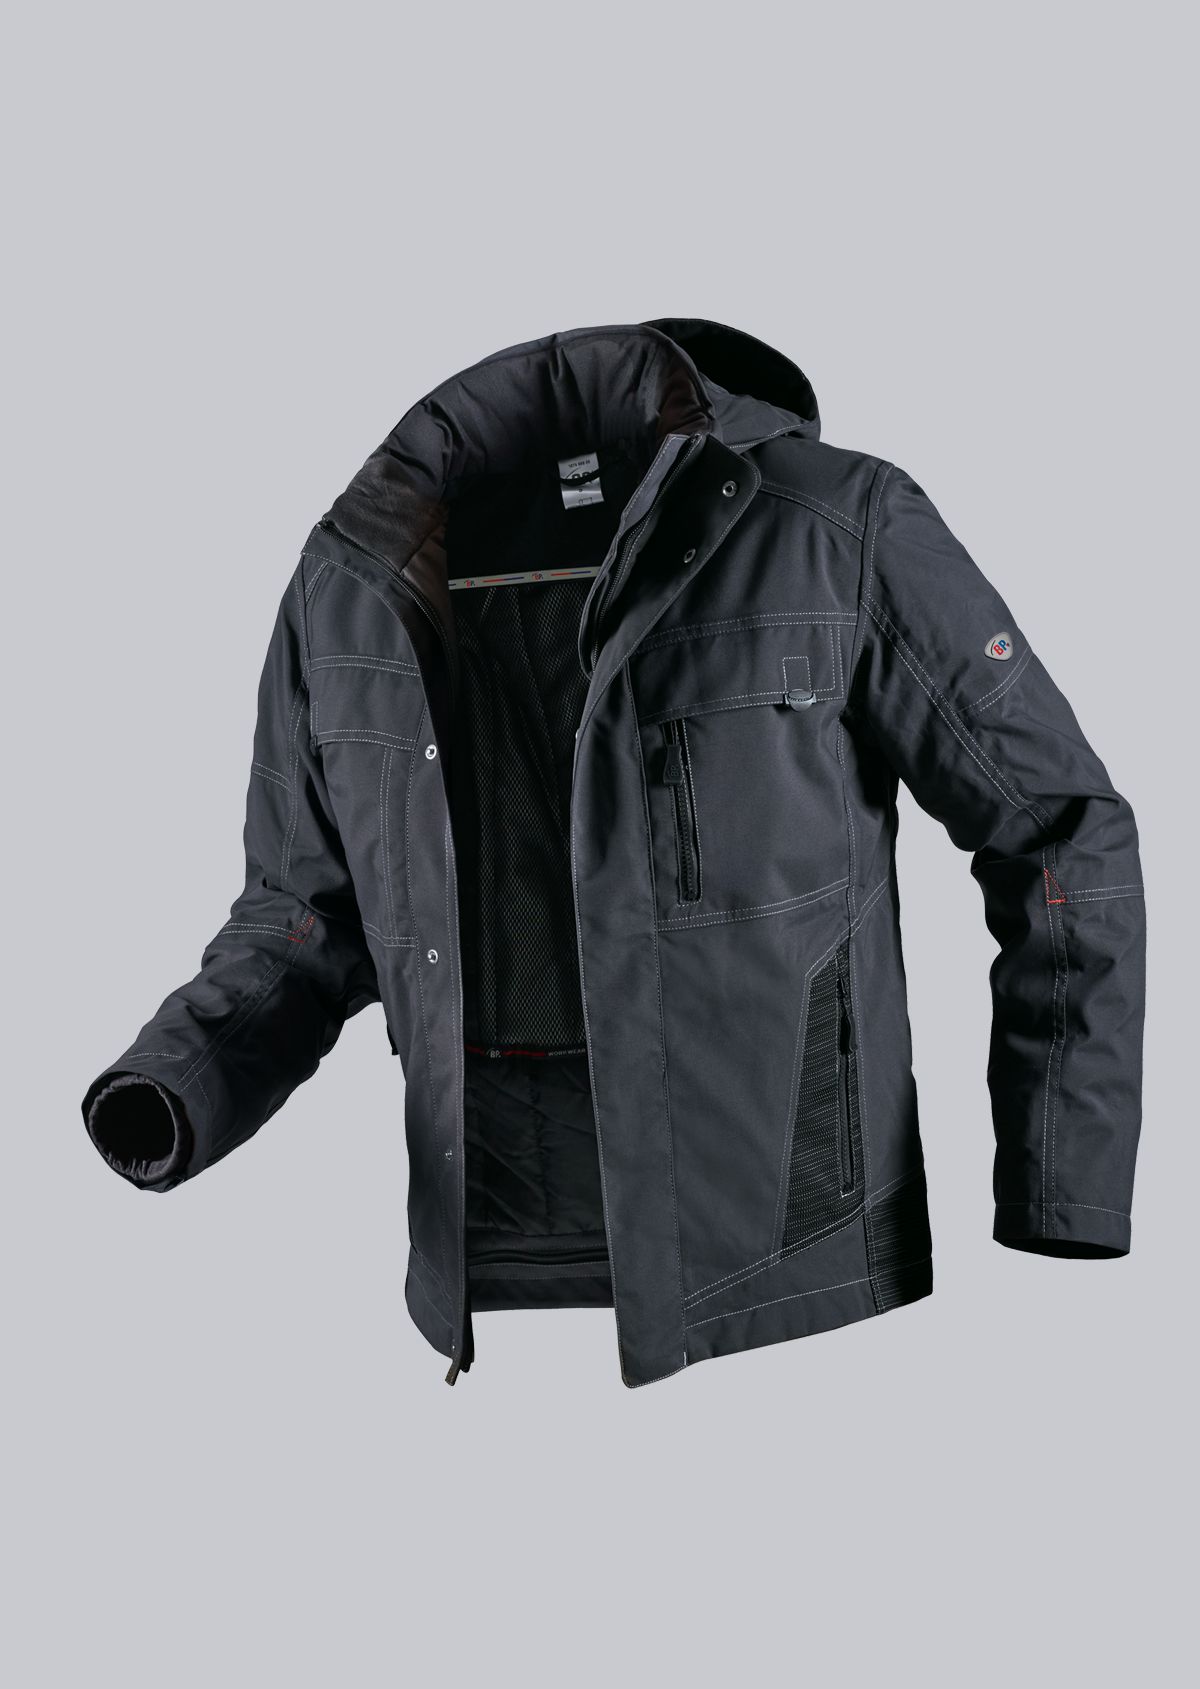 BP® Weatherproof winter jacket